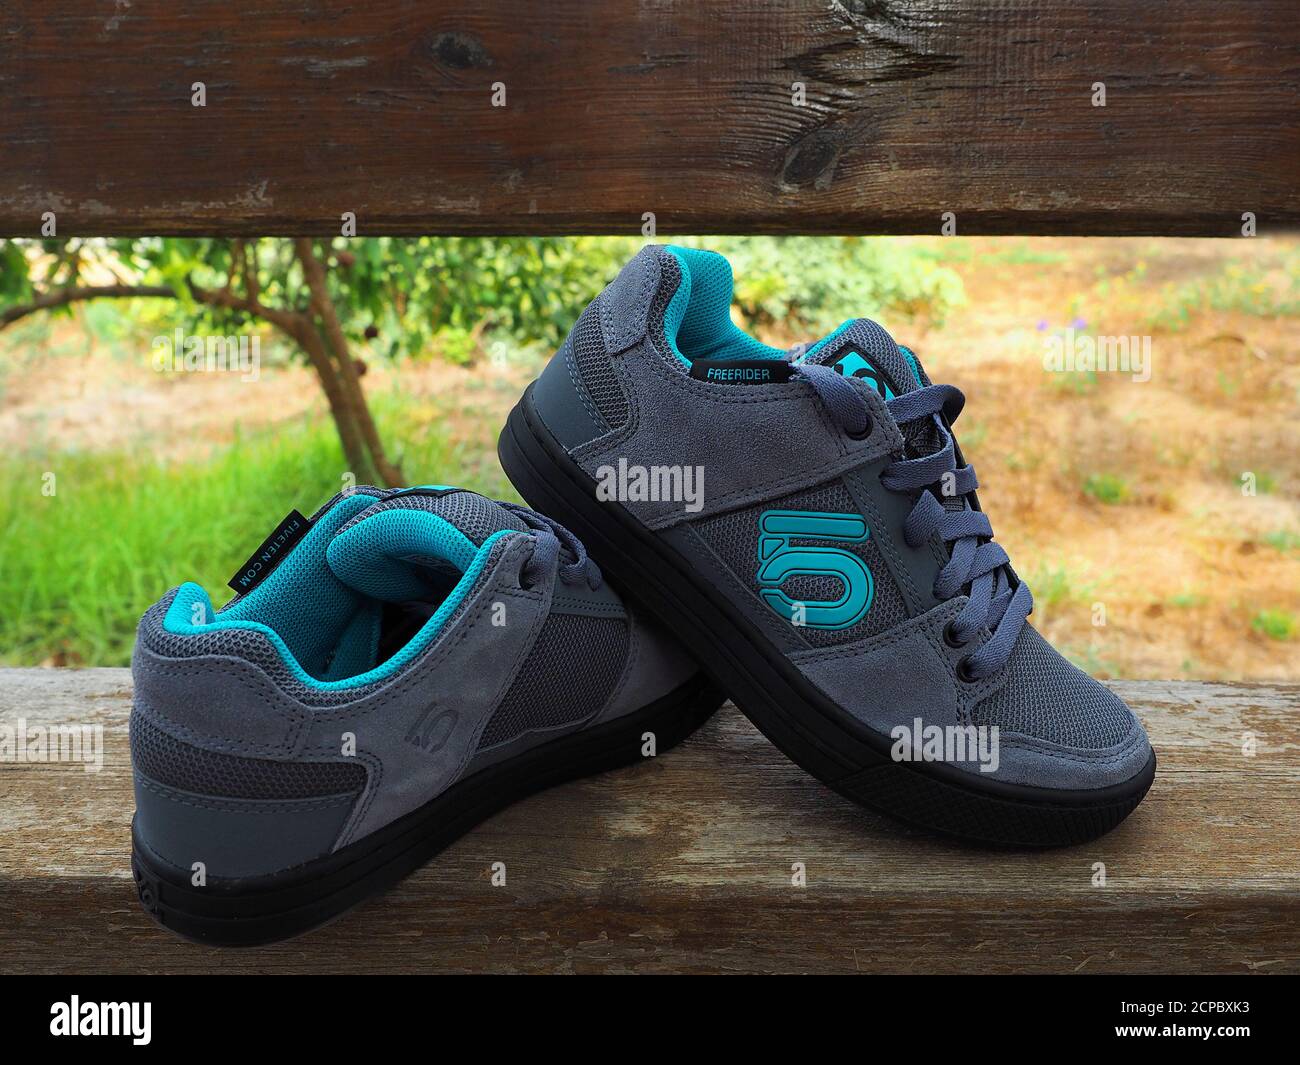 Adidas Five Ten Freerider - woman mountain bike shoes Stock Photo - Alamy